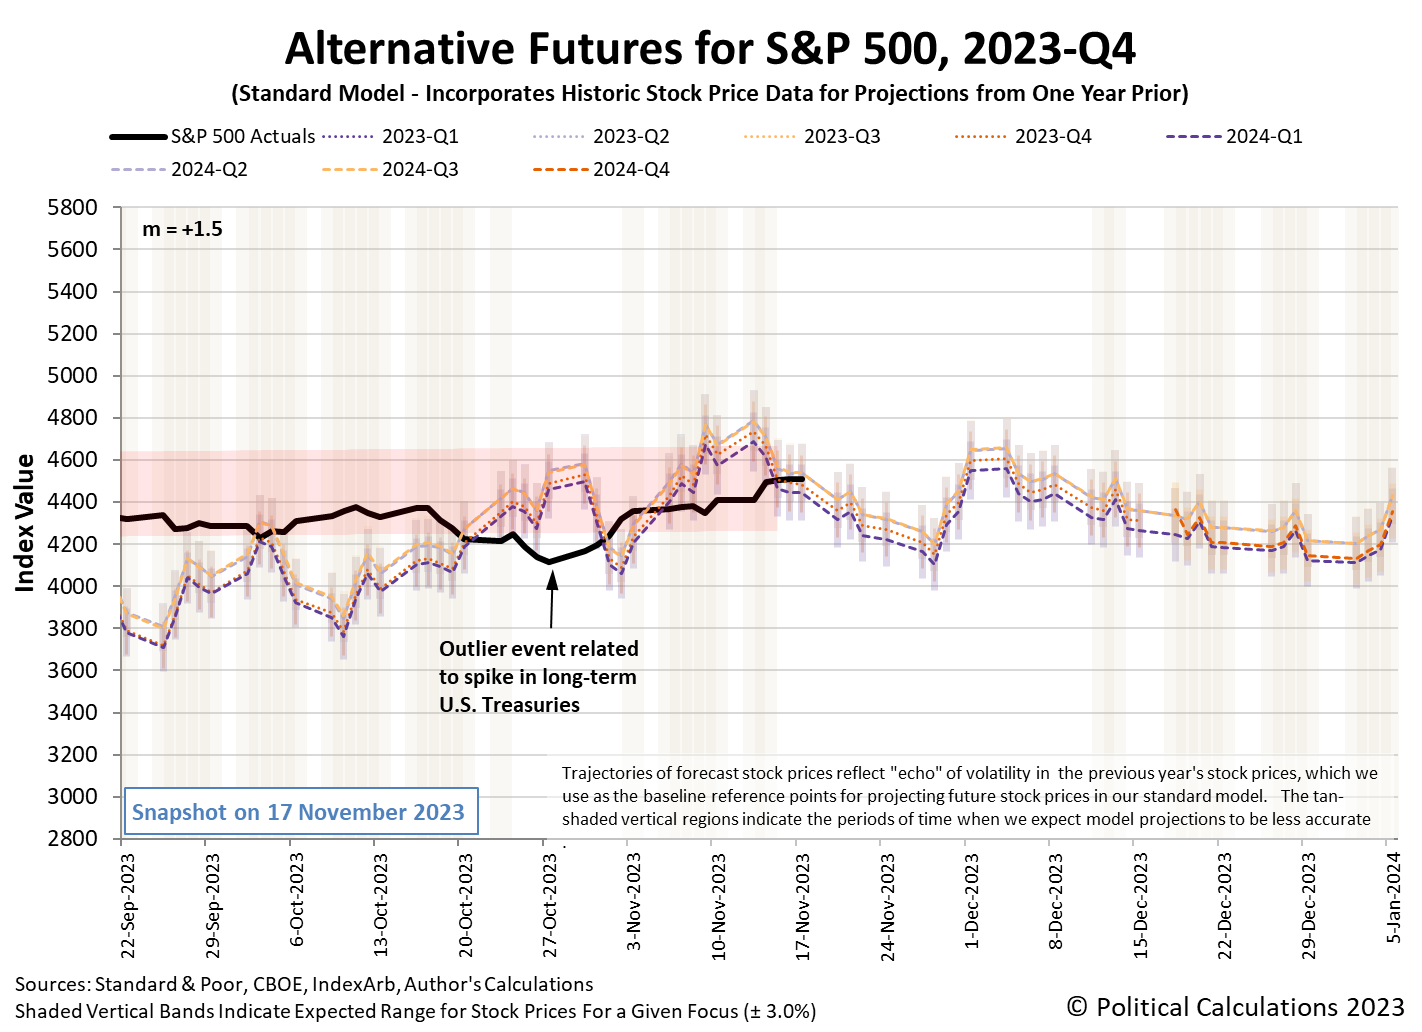 Alternative Futures - S&P 500 - 2023Q4 - Standard Model (m=+1.5 from 9 March 2023) - Snapshot on 17 Nov 2023